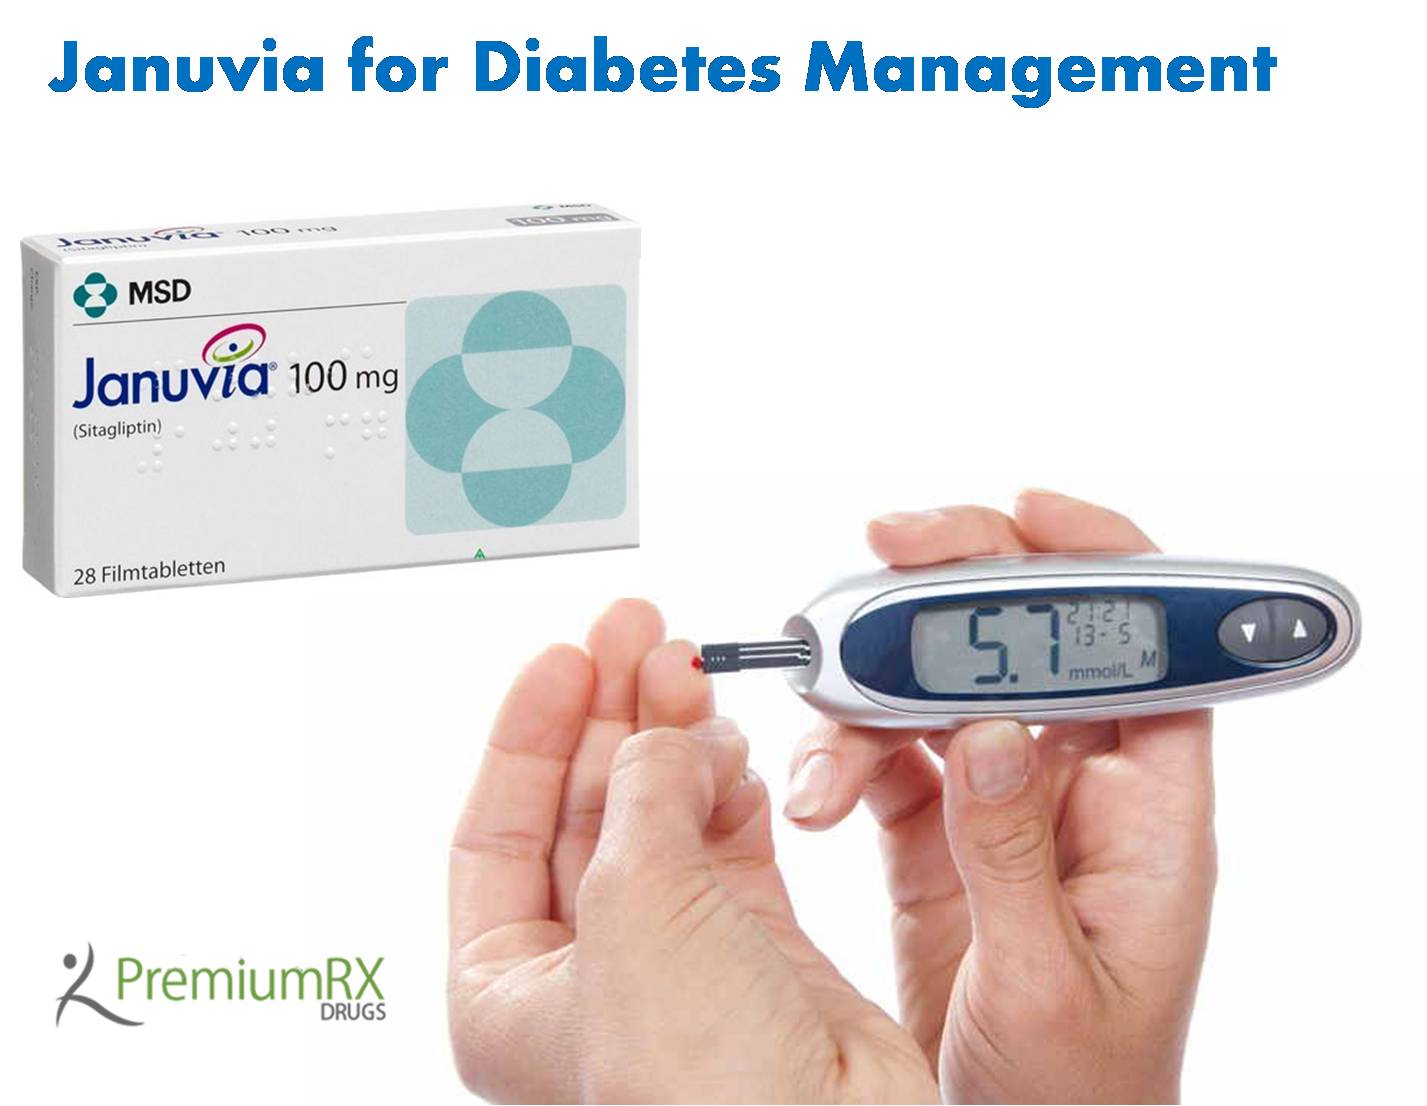 Januvia work in Diabetes Management